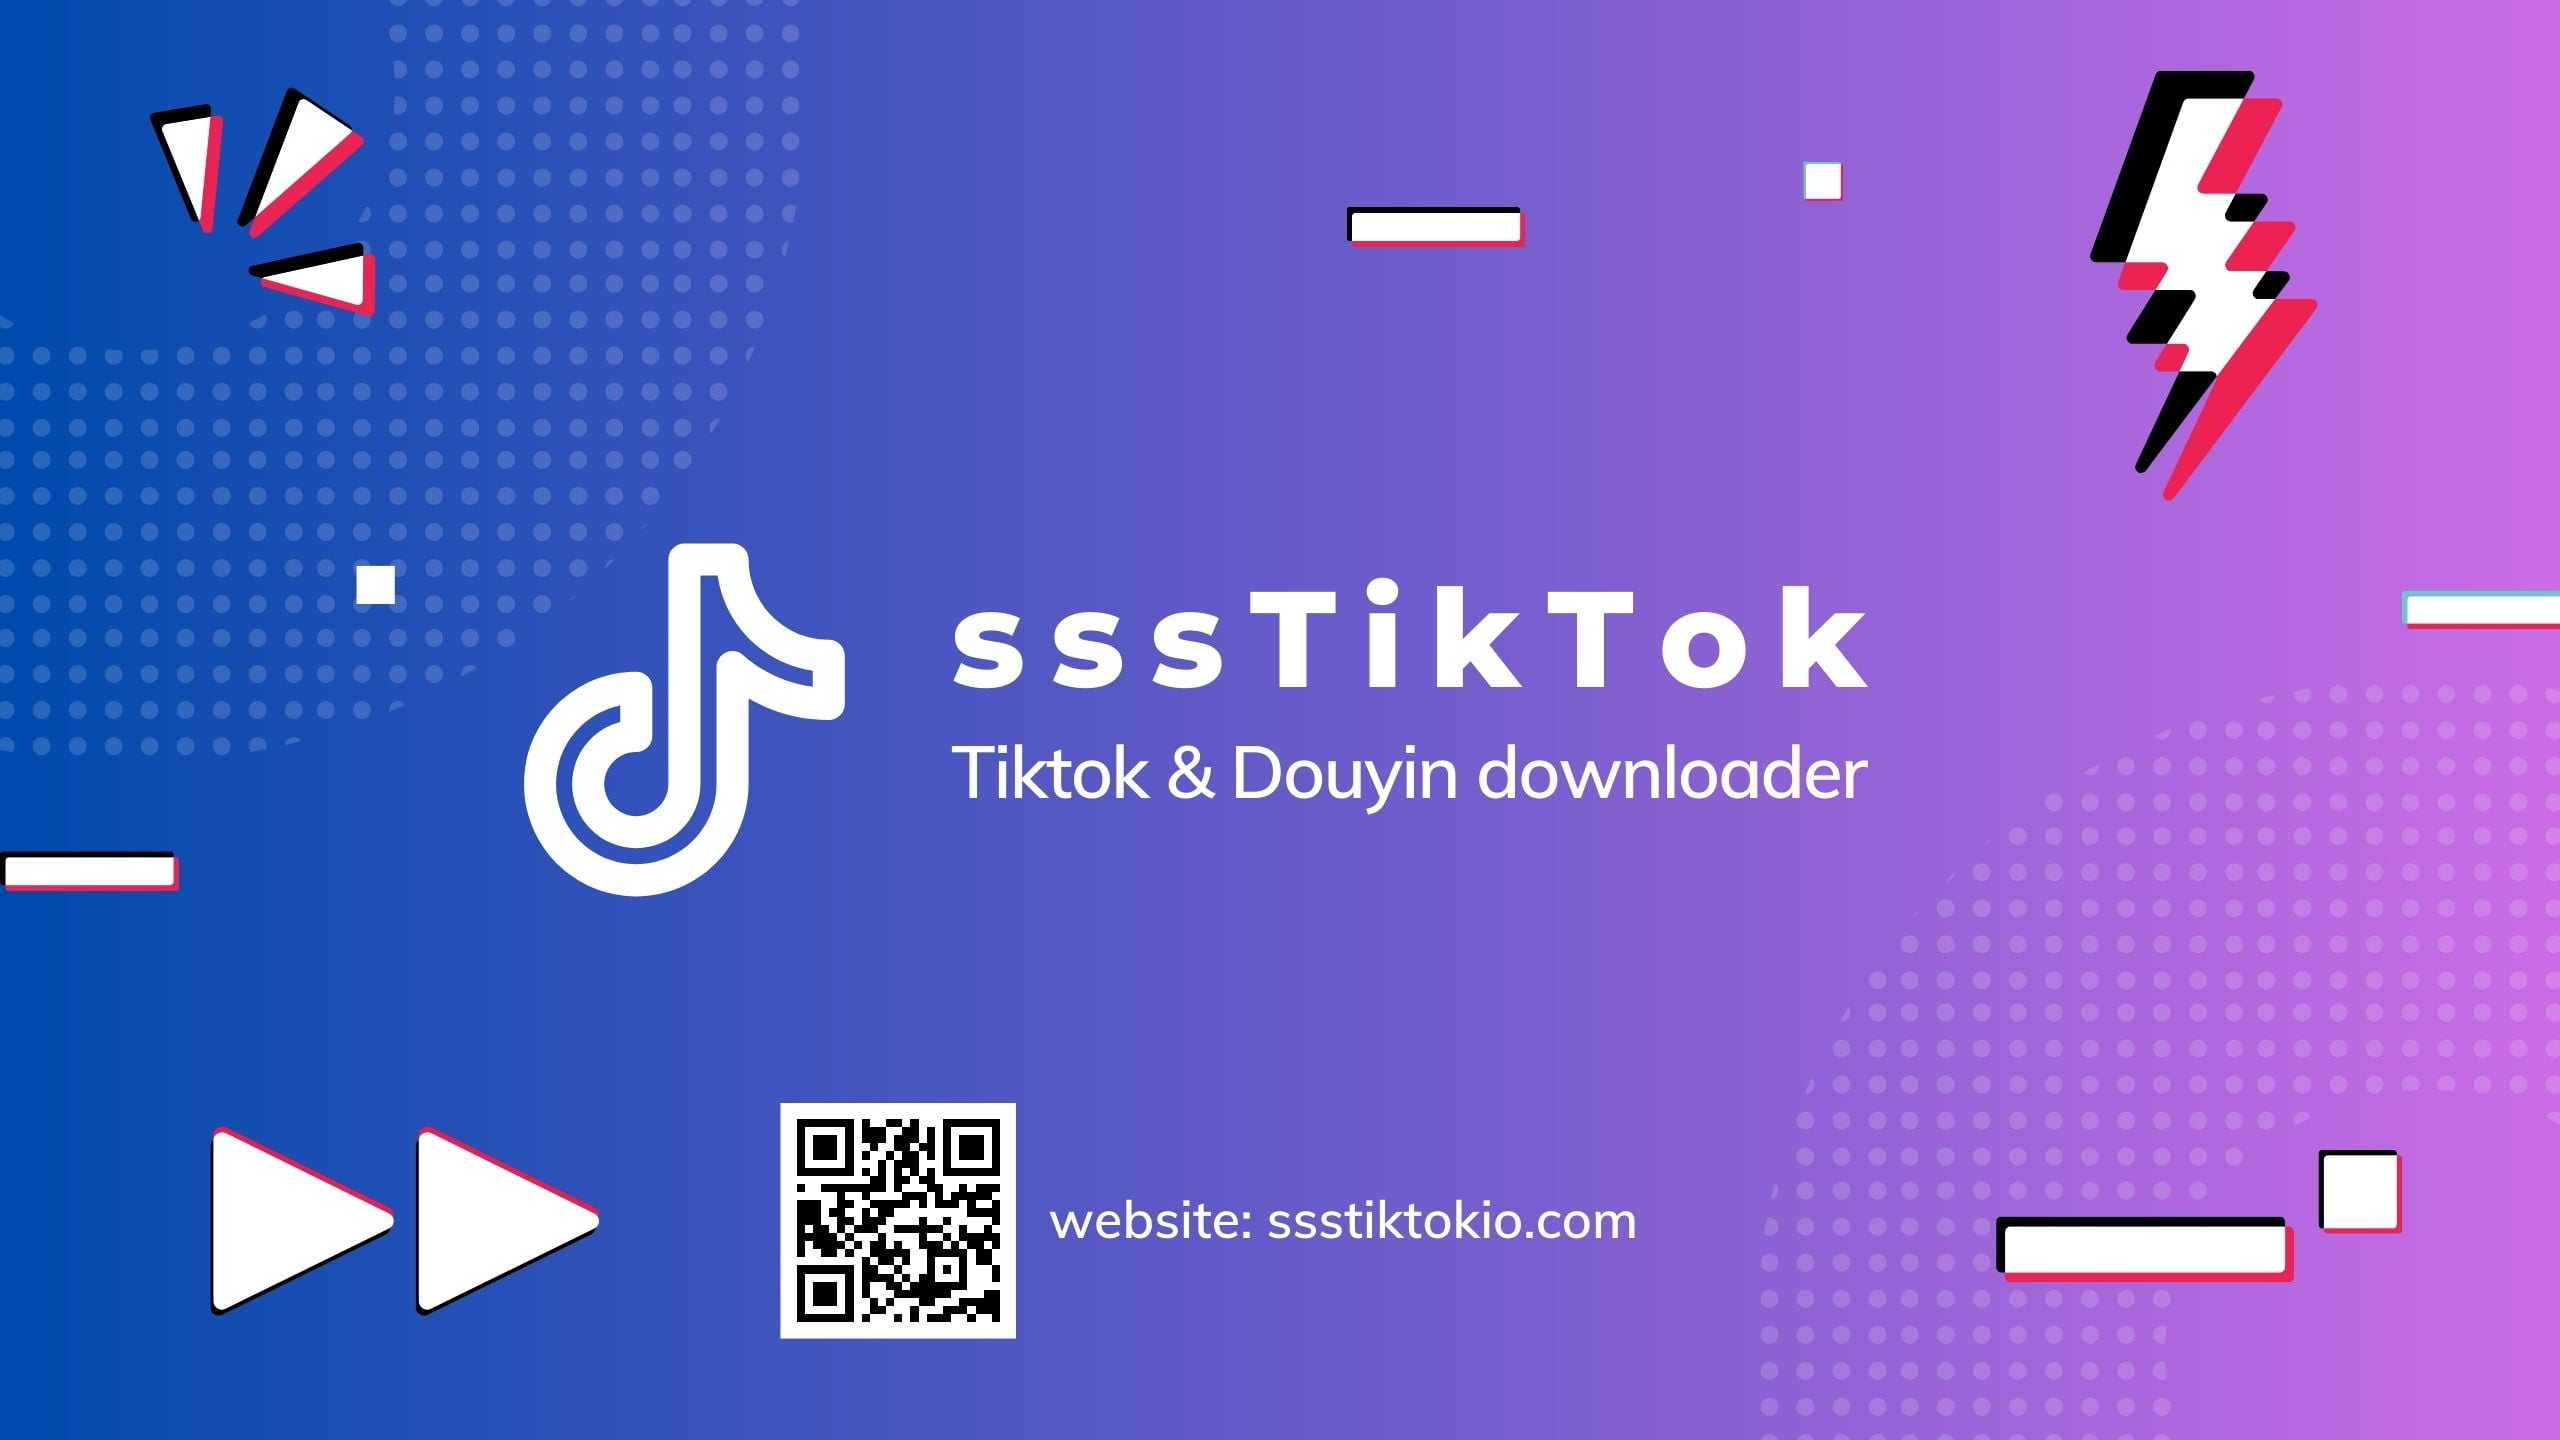 sssTiktok - Tiktok downloader online - Download video Tiktok gratis